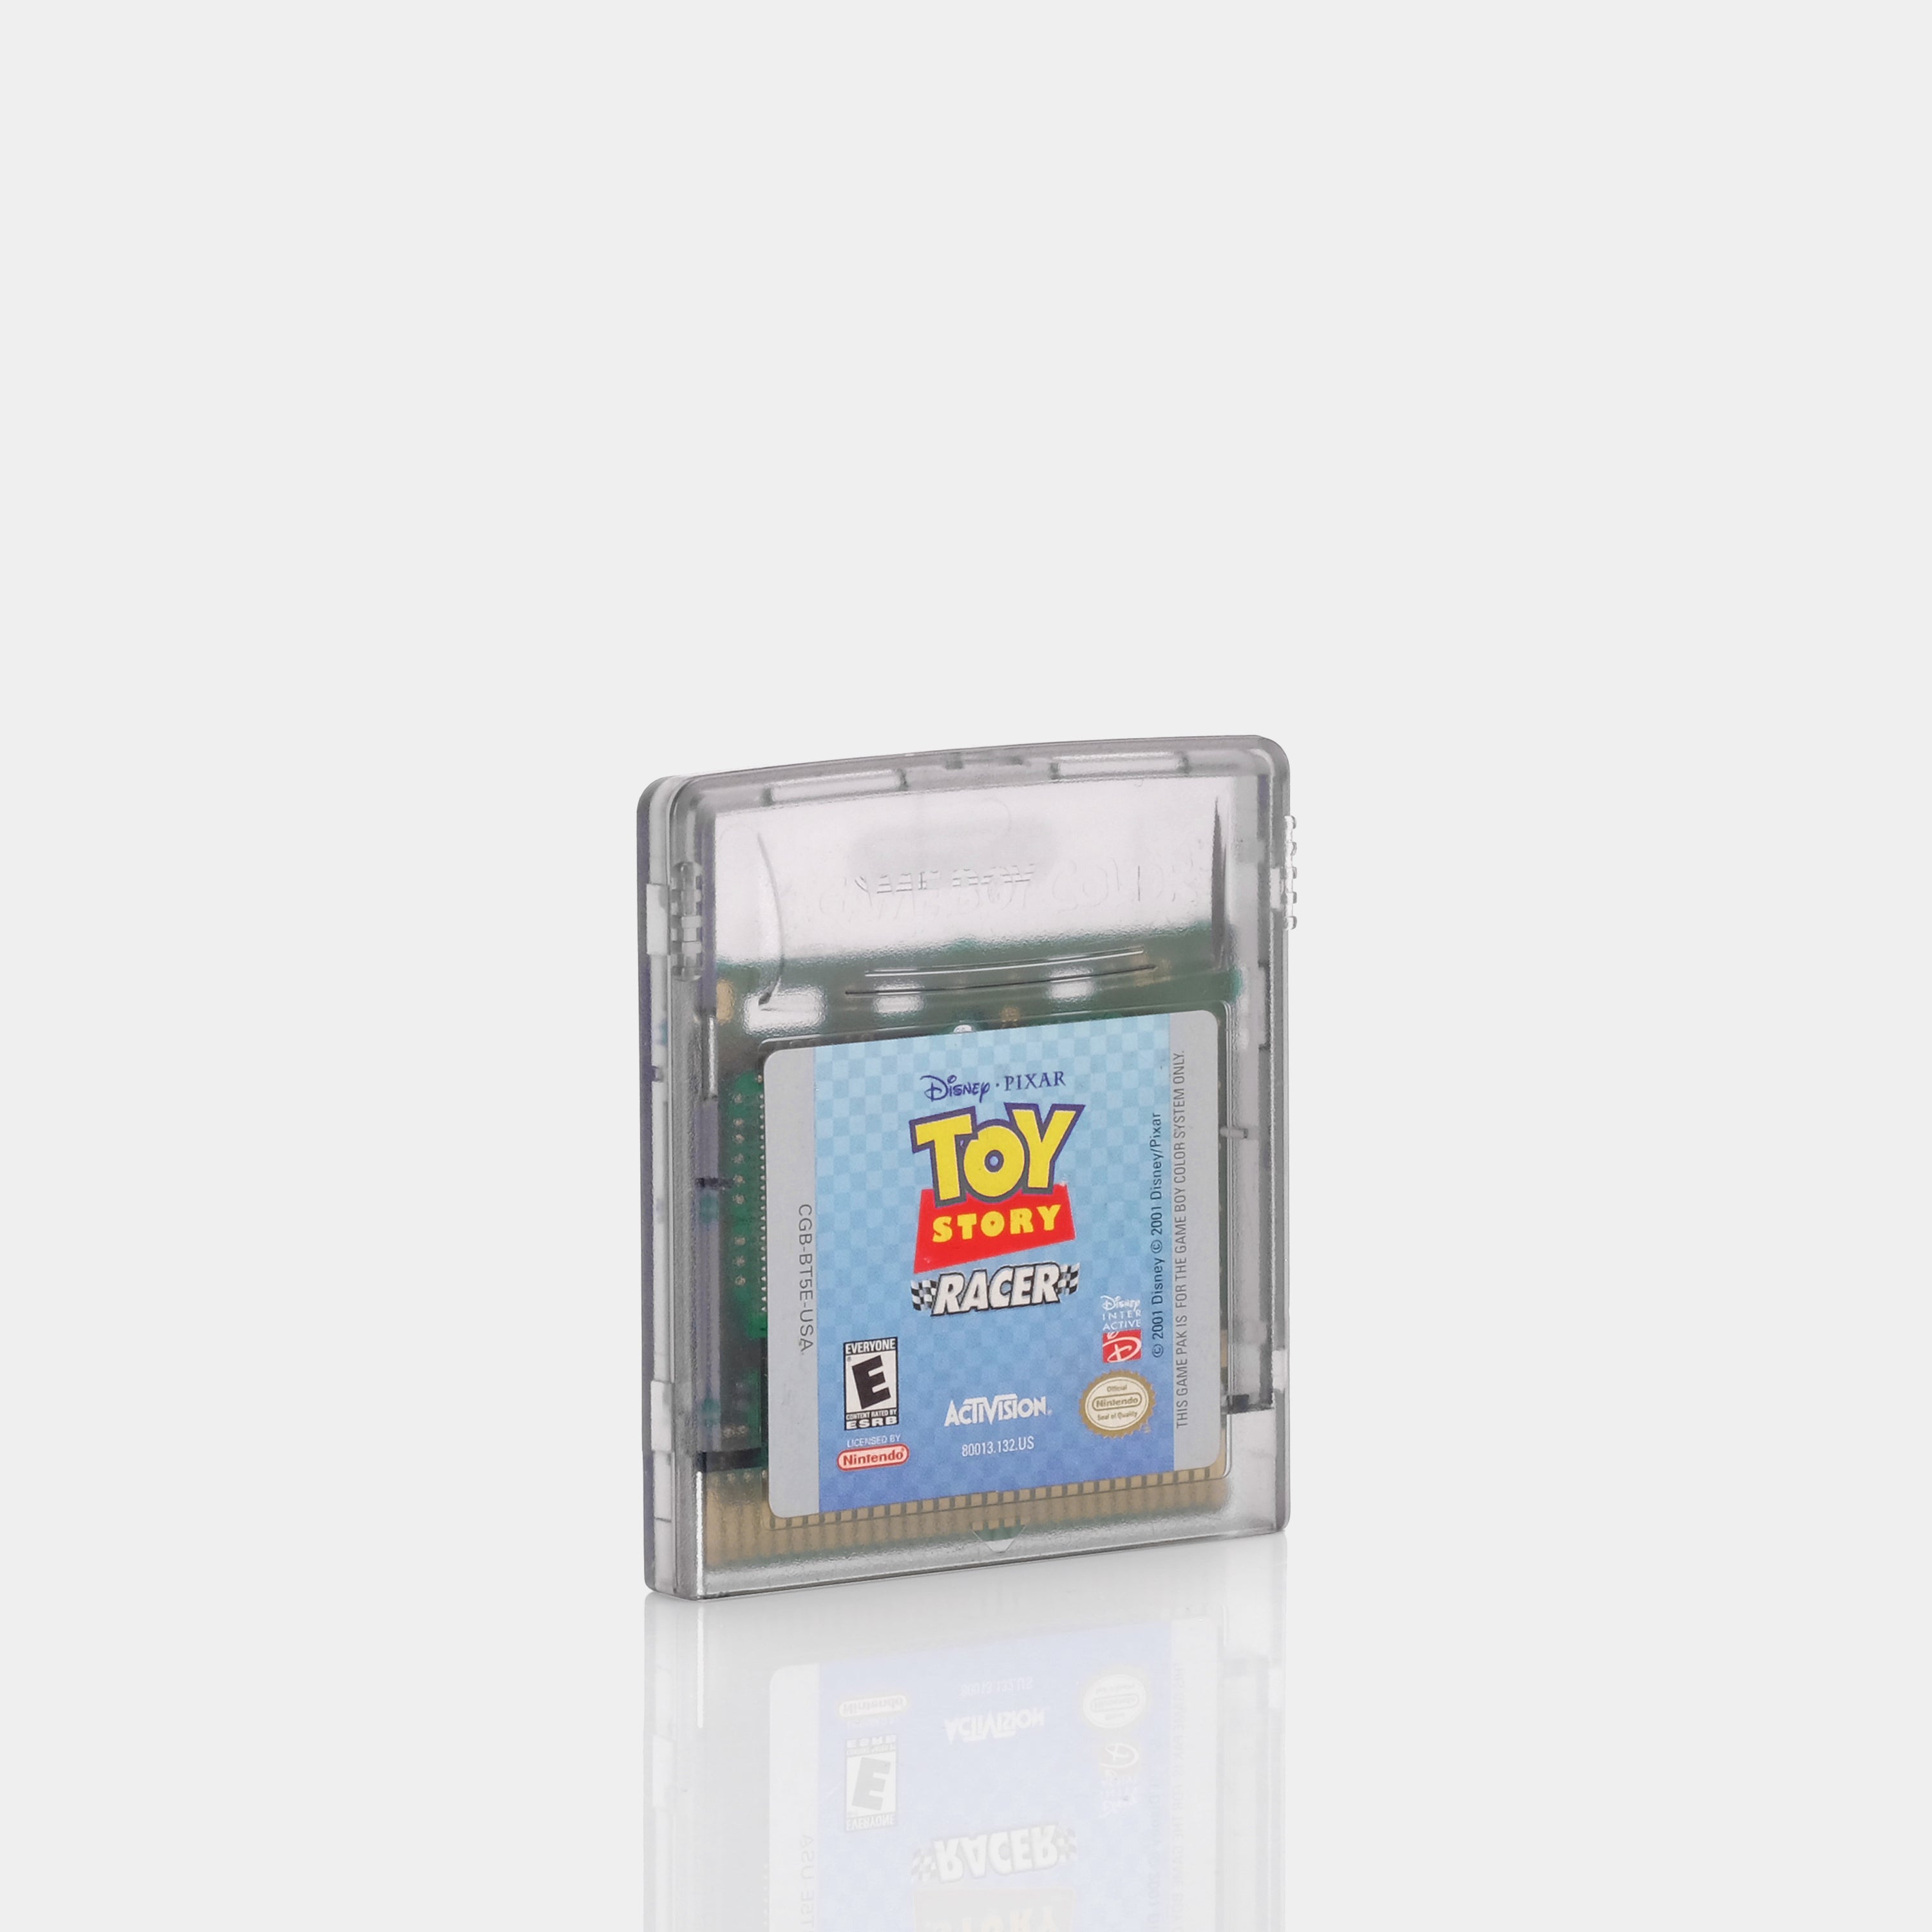 Disney/Pixar's Toy Story Racer Game Boy Color Game